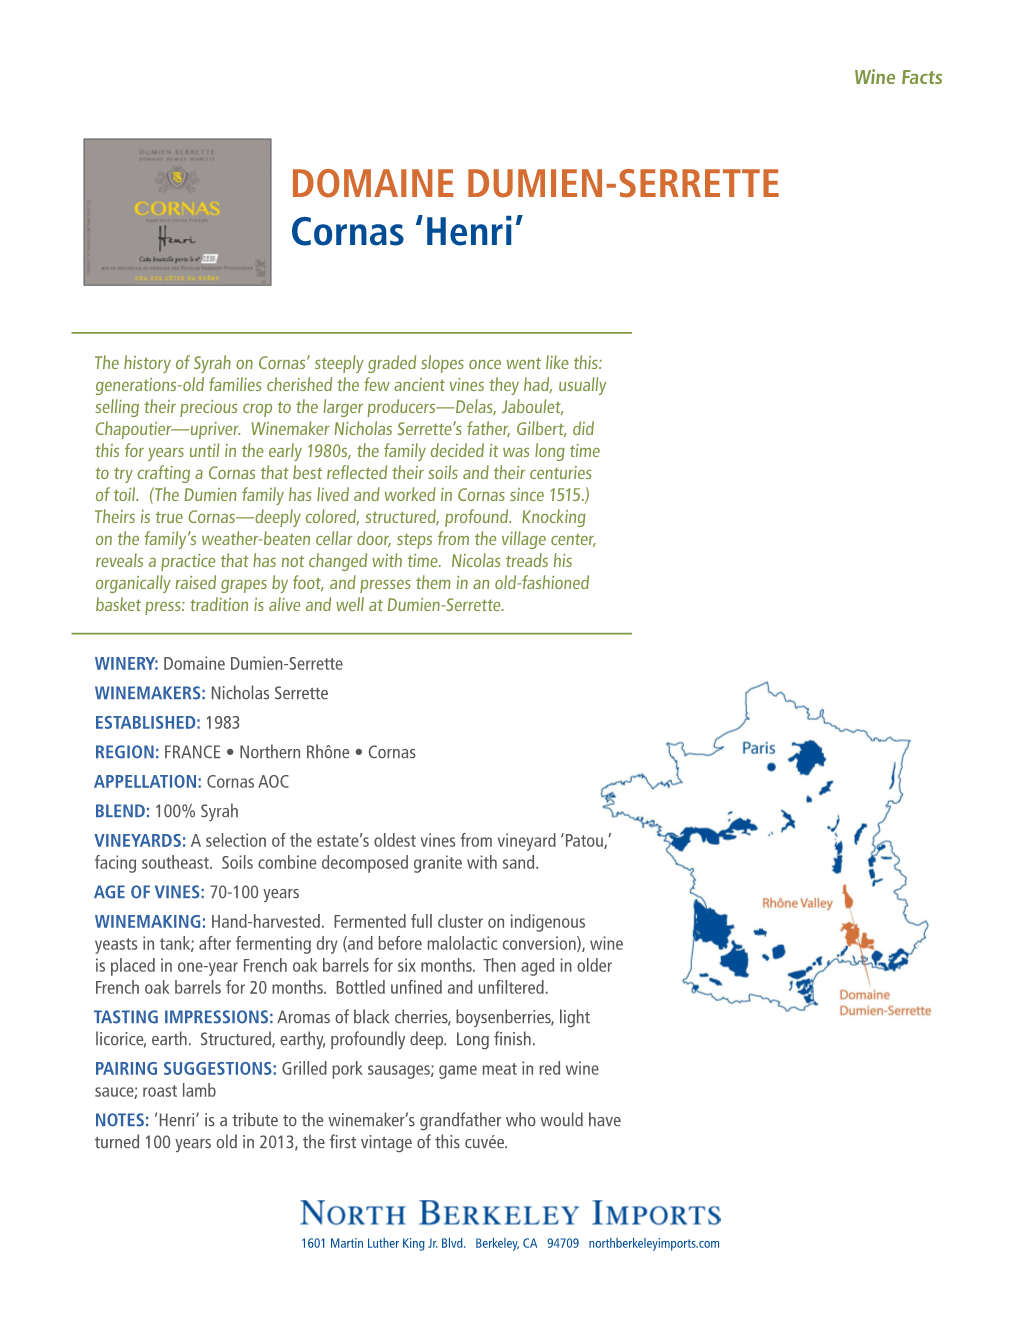 DOMAINE DUMIEN-SERRETTE Cornas 'Henri'